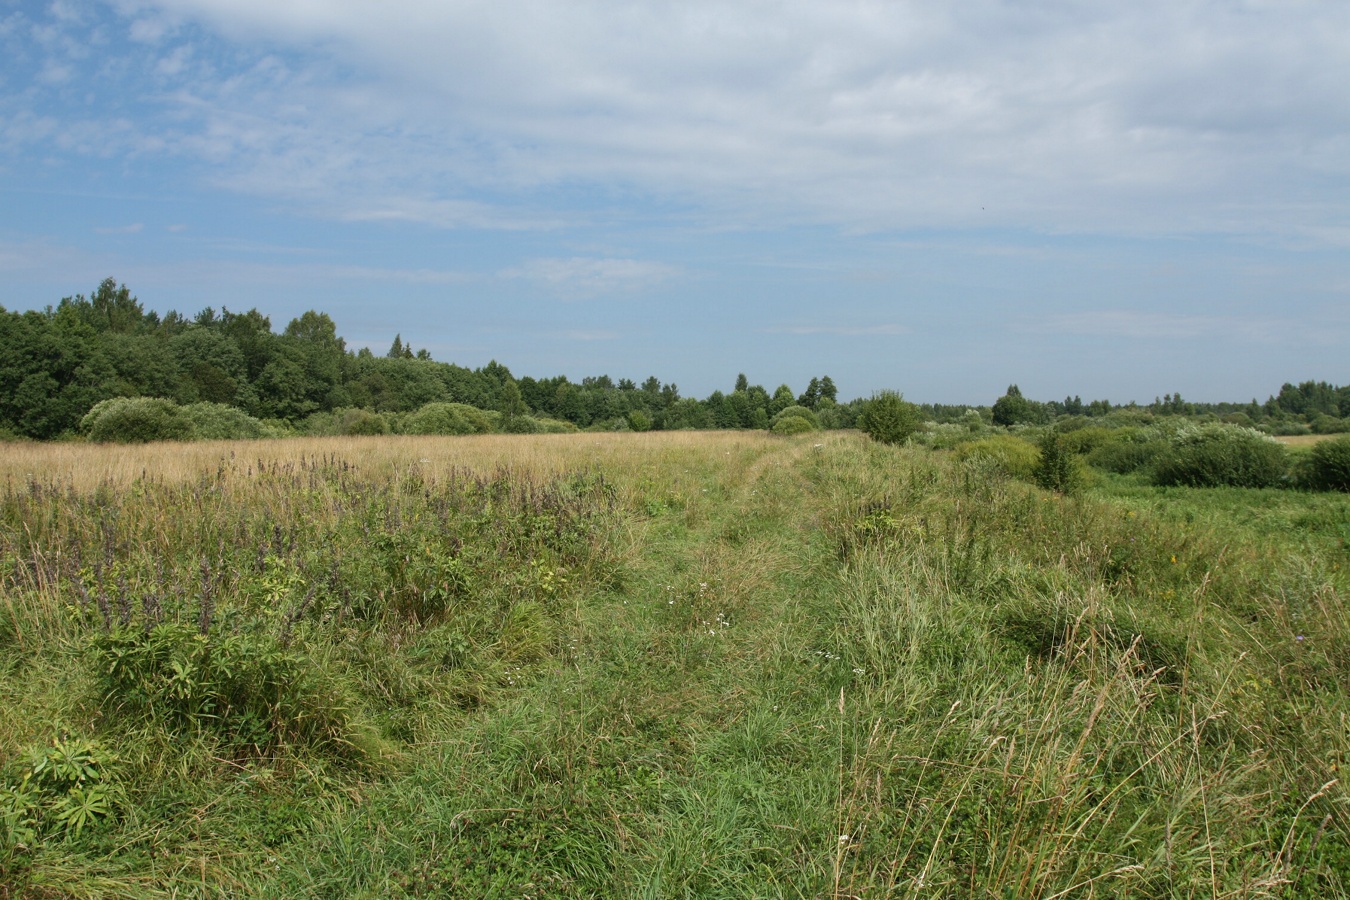 Филатова Гора, image of landscape/habitat.